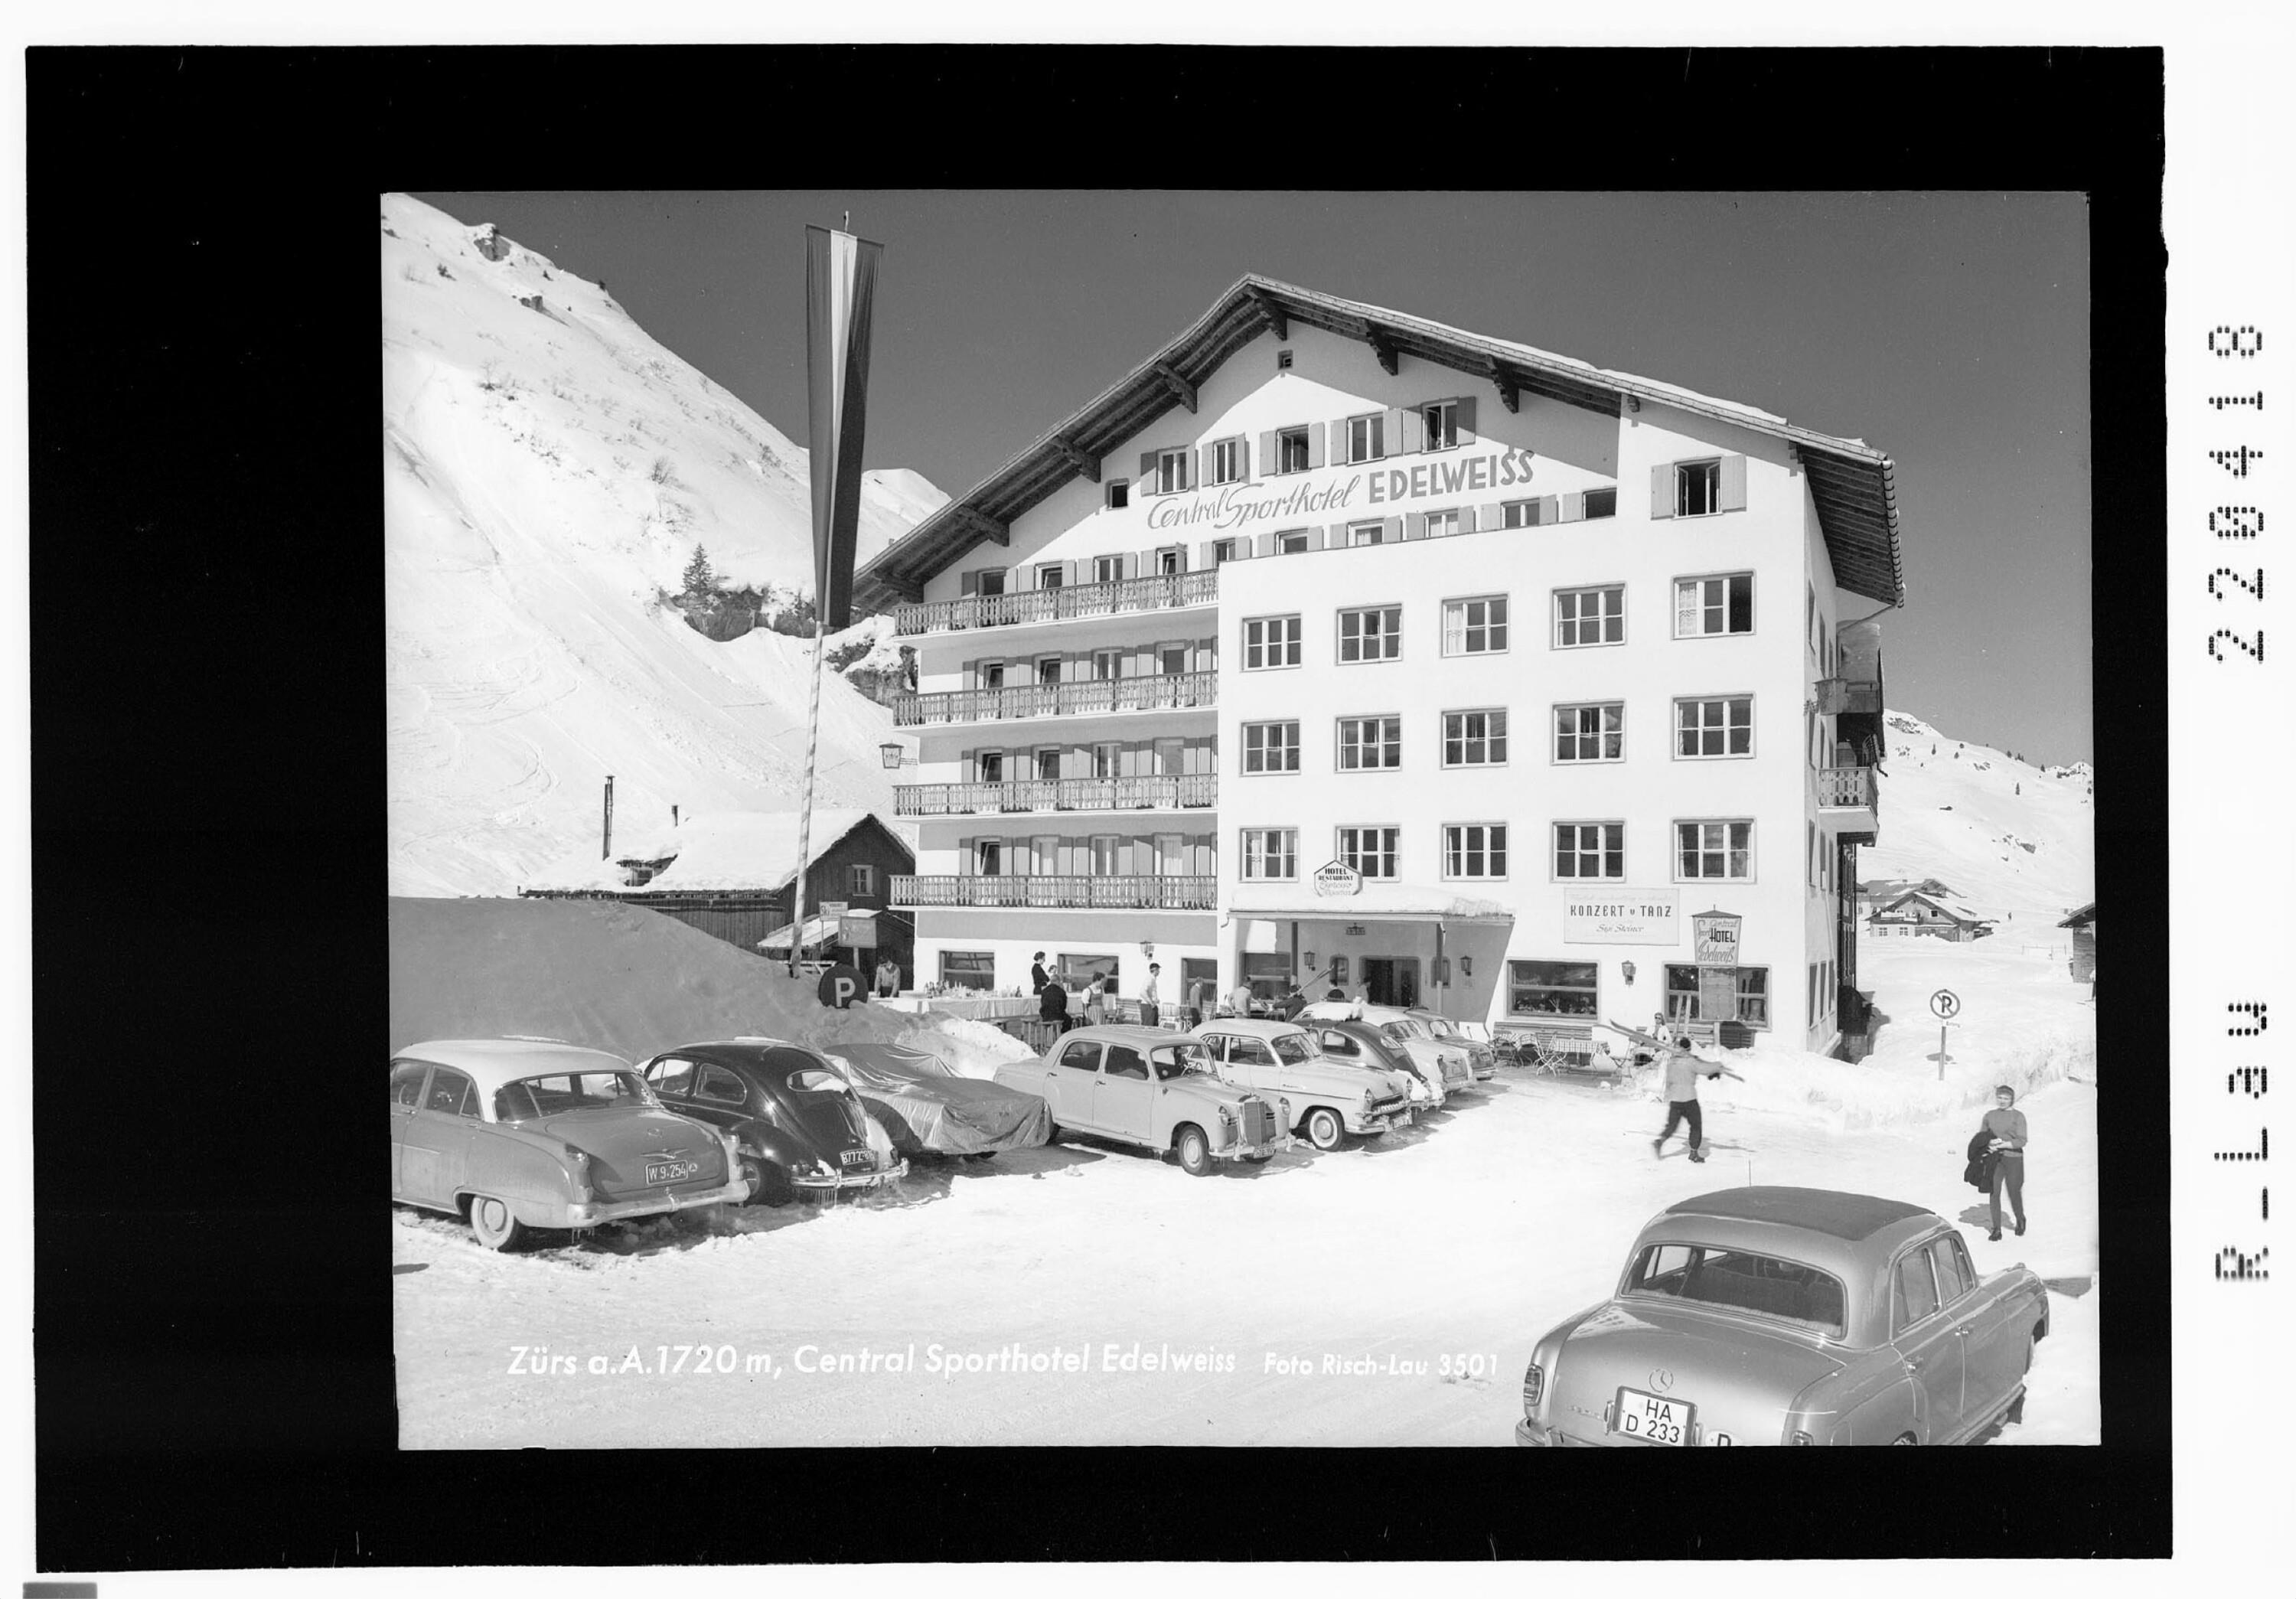 Zürs am Arlberg 1720 m, Central Sporthotel Edelweiss></div>


    <hr>
    <div class=